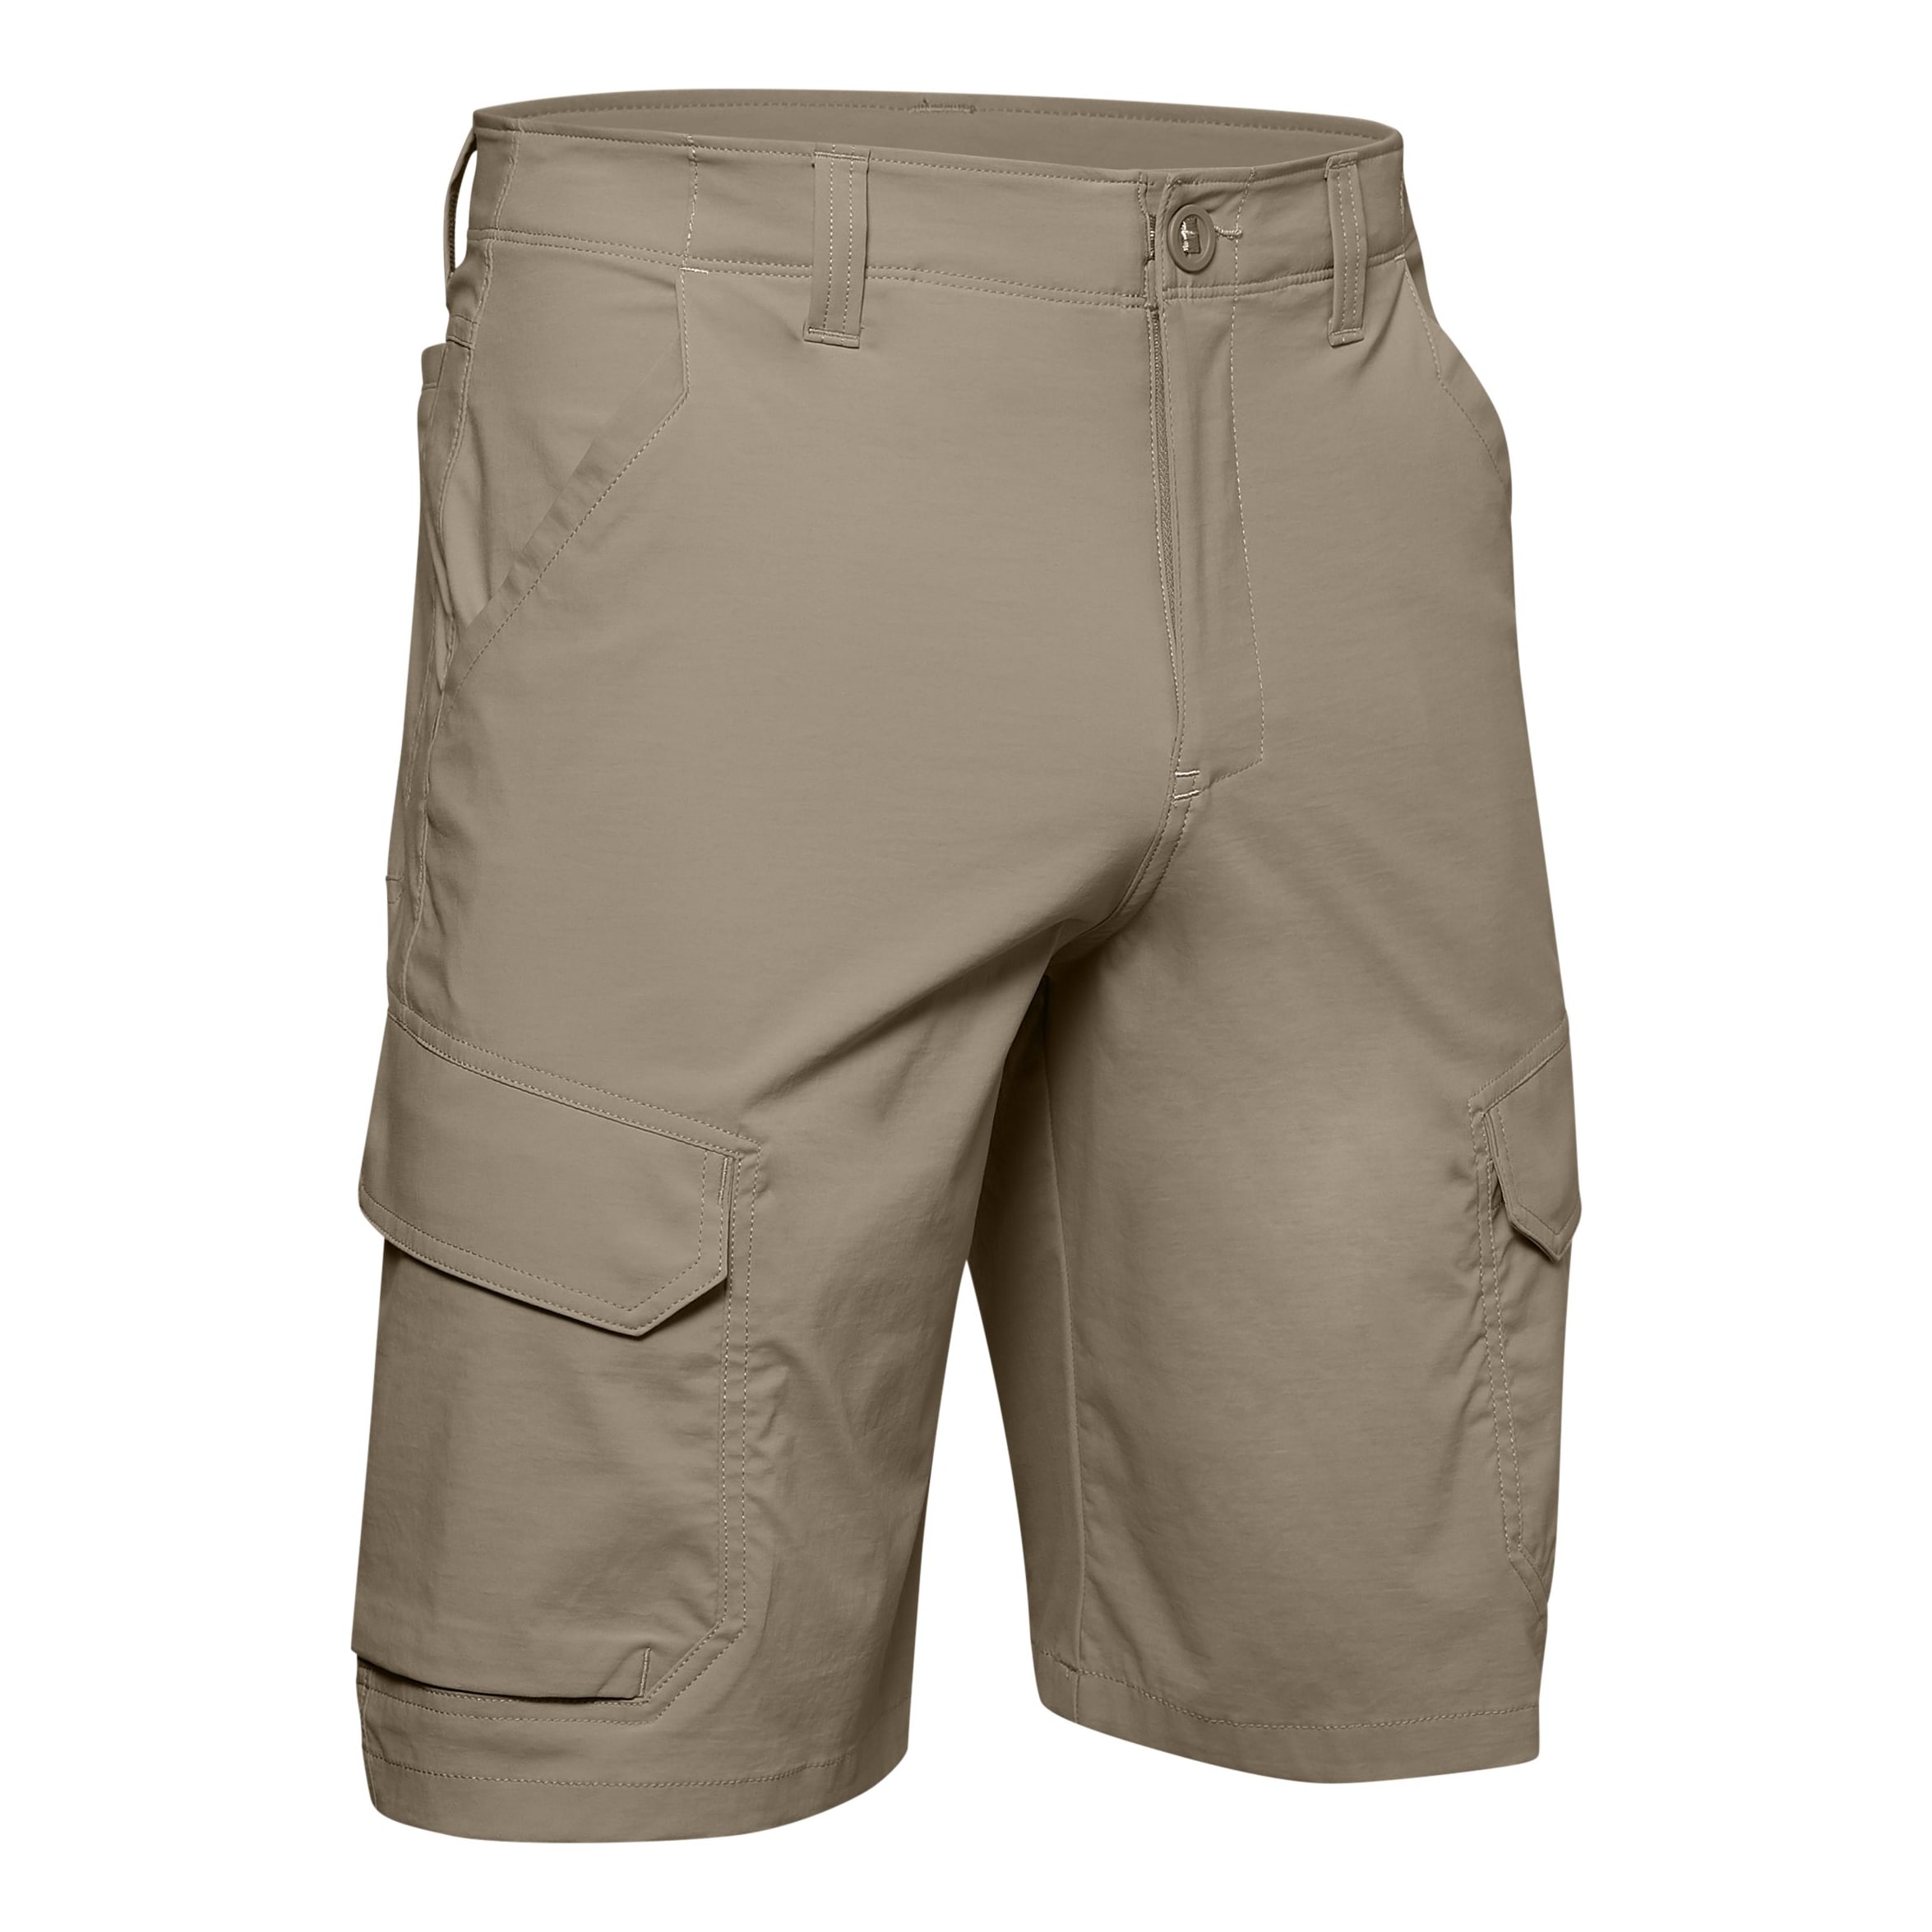 Under Armour® Men’s Fish Hunter Cargo Shorts - Khaki/Summit White